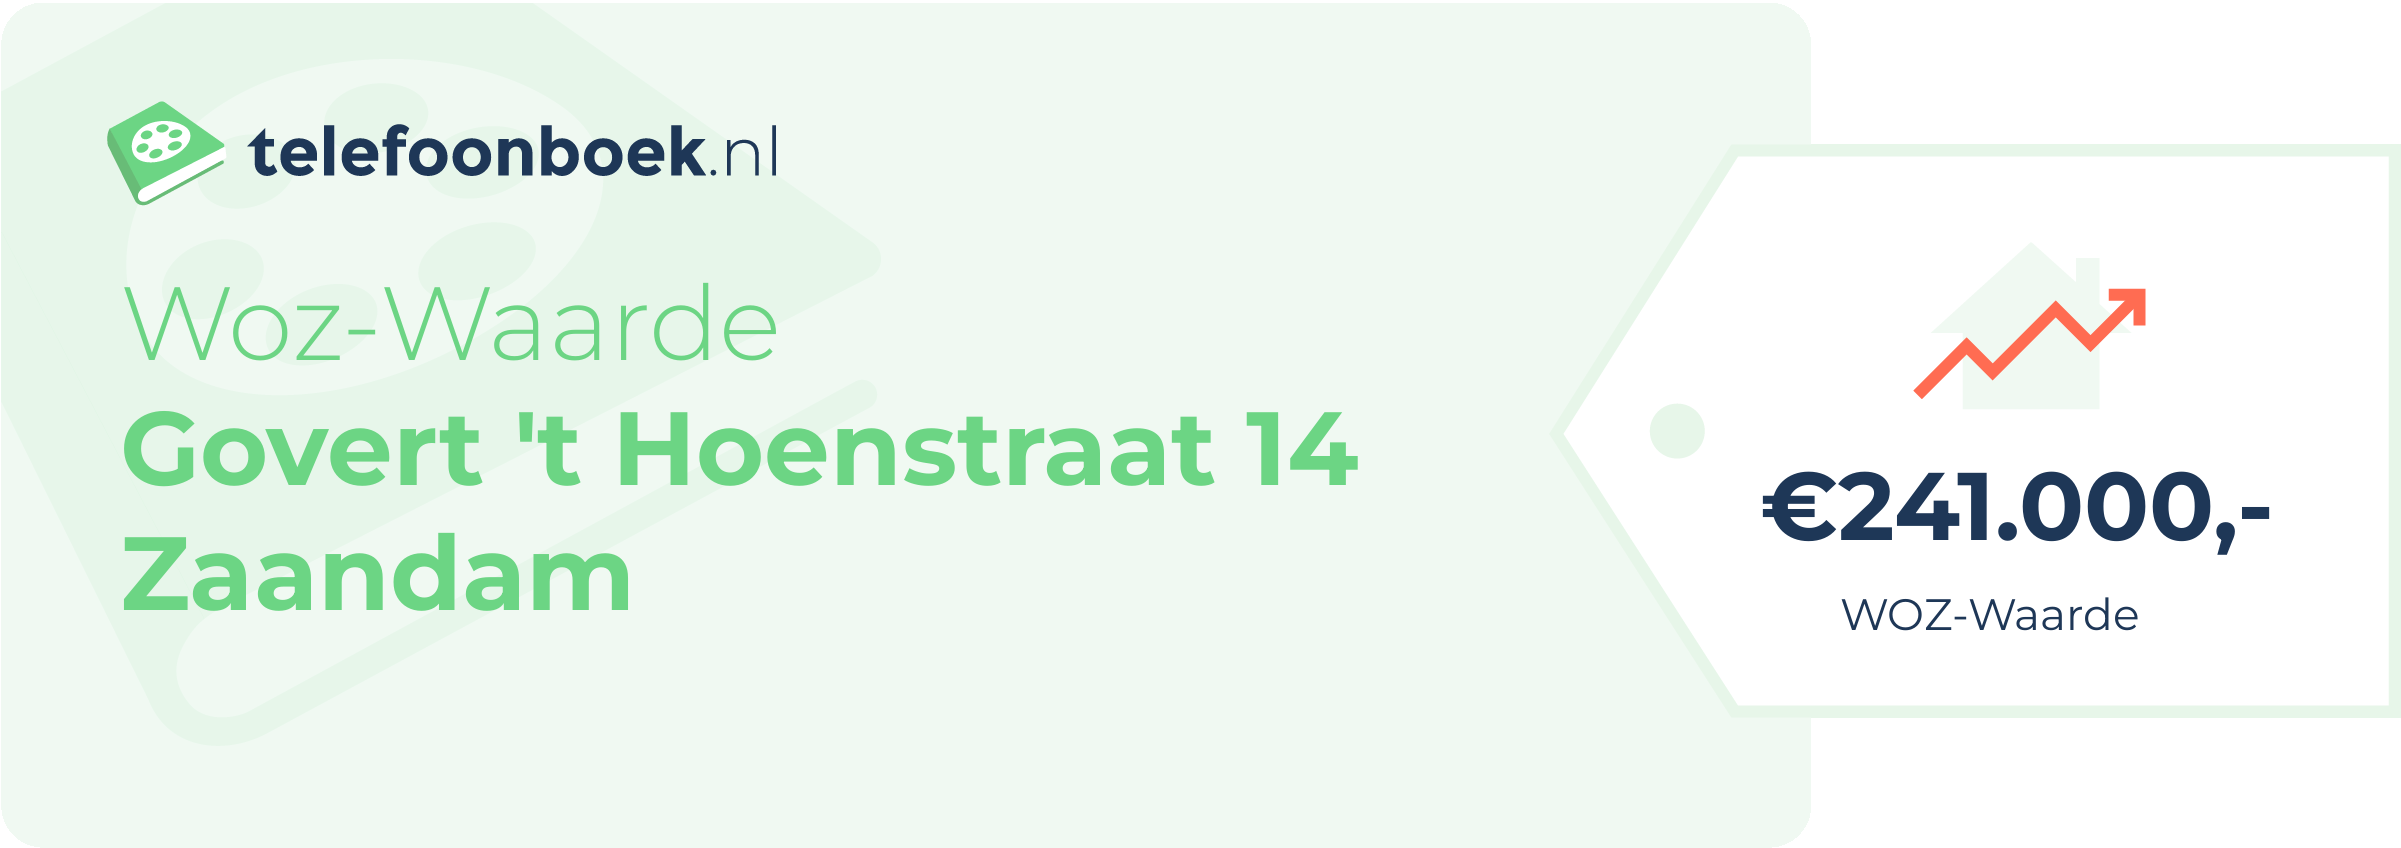 WOZ-waarde Govert 't Hoenstraat 14 Zaandam